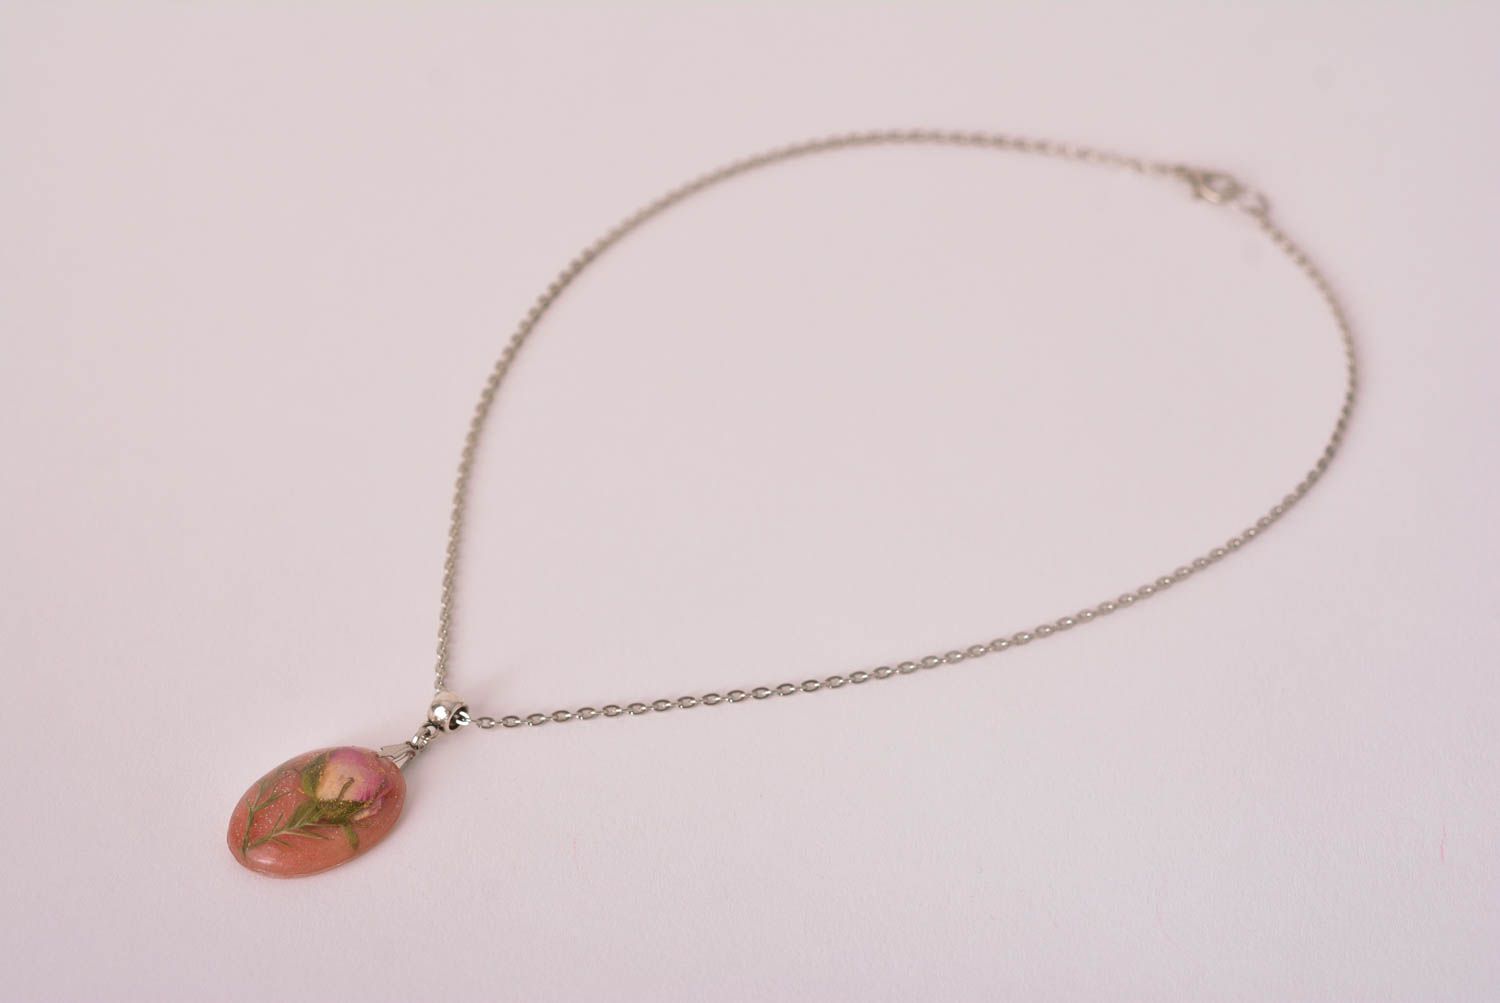 Stylish handmade flower pendant epoxy resin pendant with real flowers gift idea photo 2